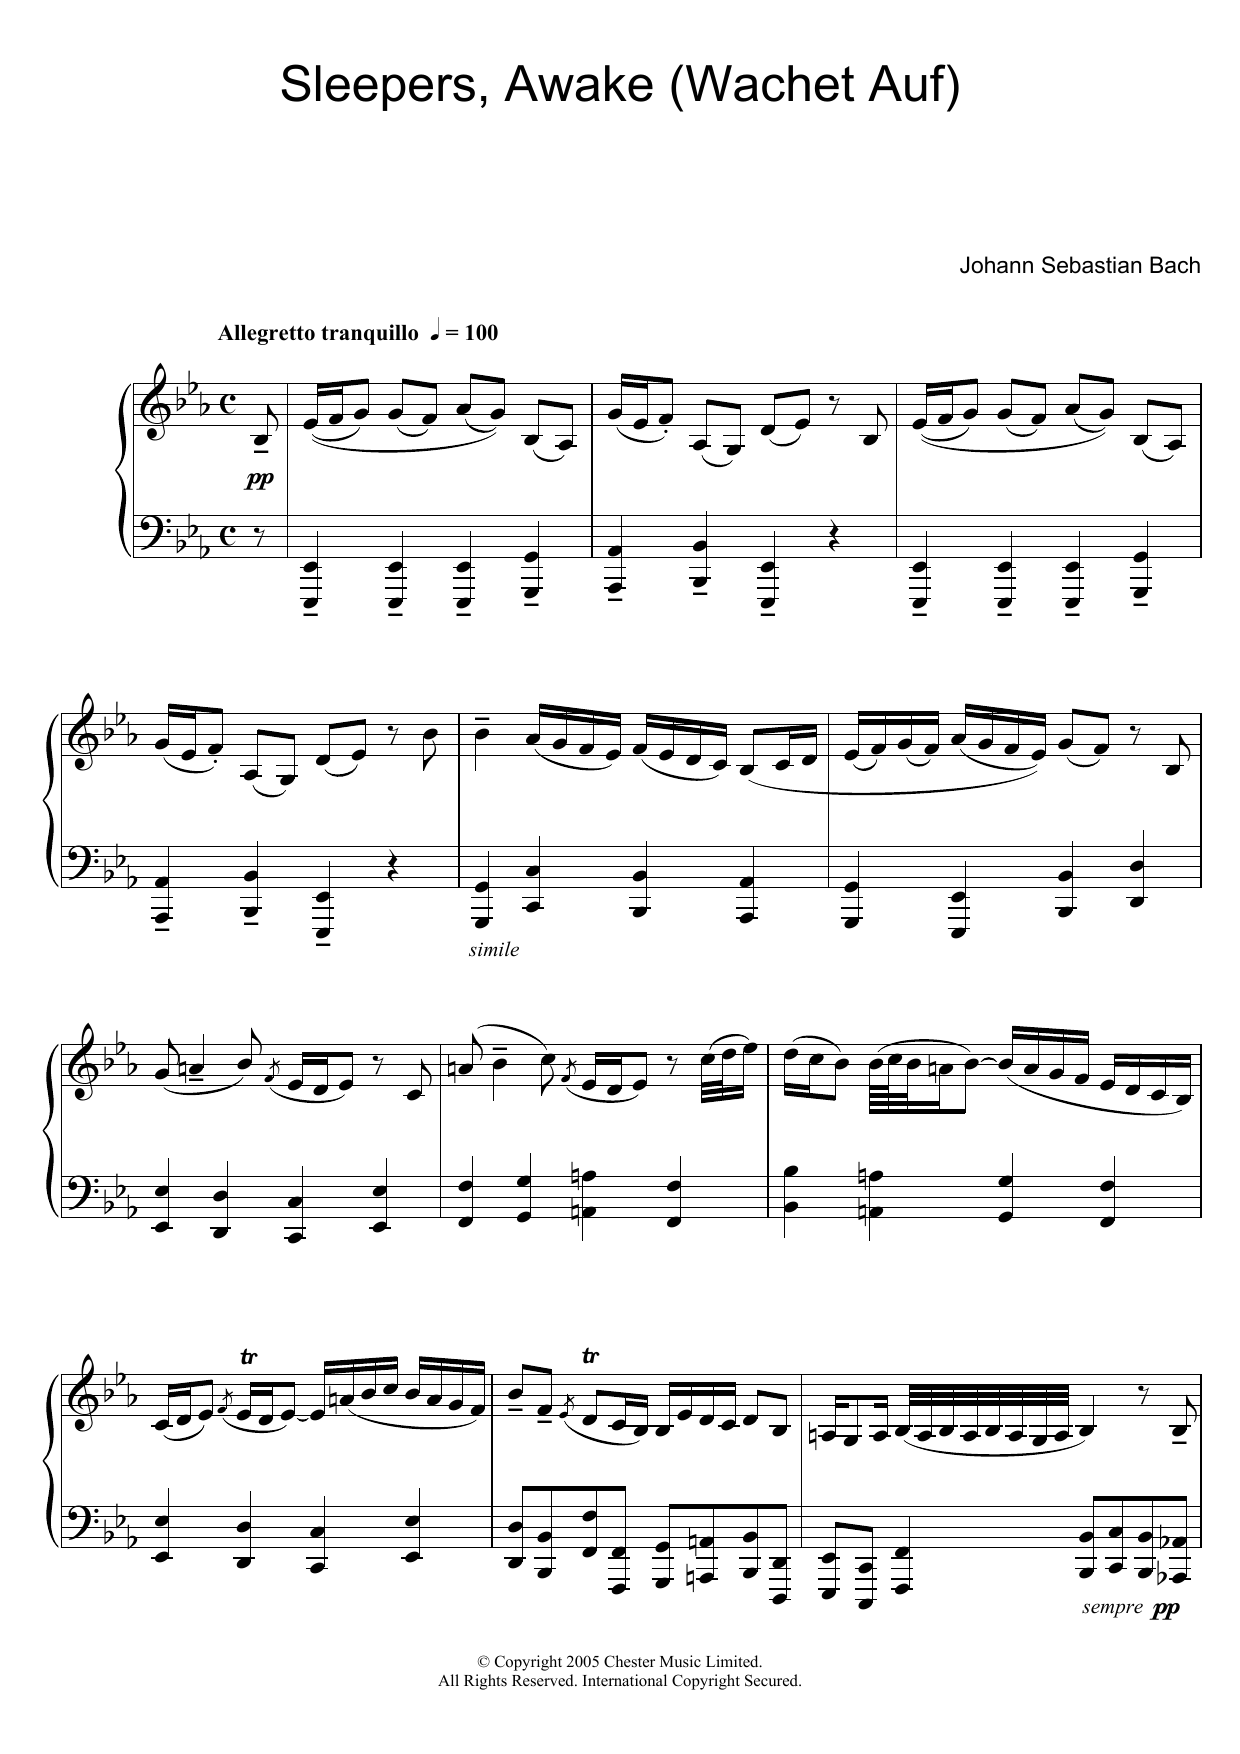 Download Johann Sebastian Bach Sleepers, Awake (Wachet Auf) Sheet Music and learn how to play Flute PDF digital score in minutes